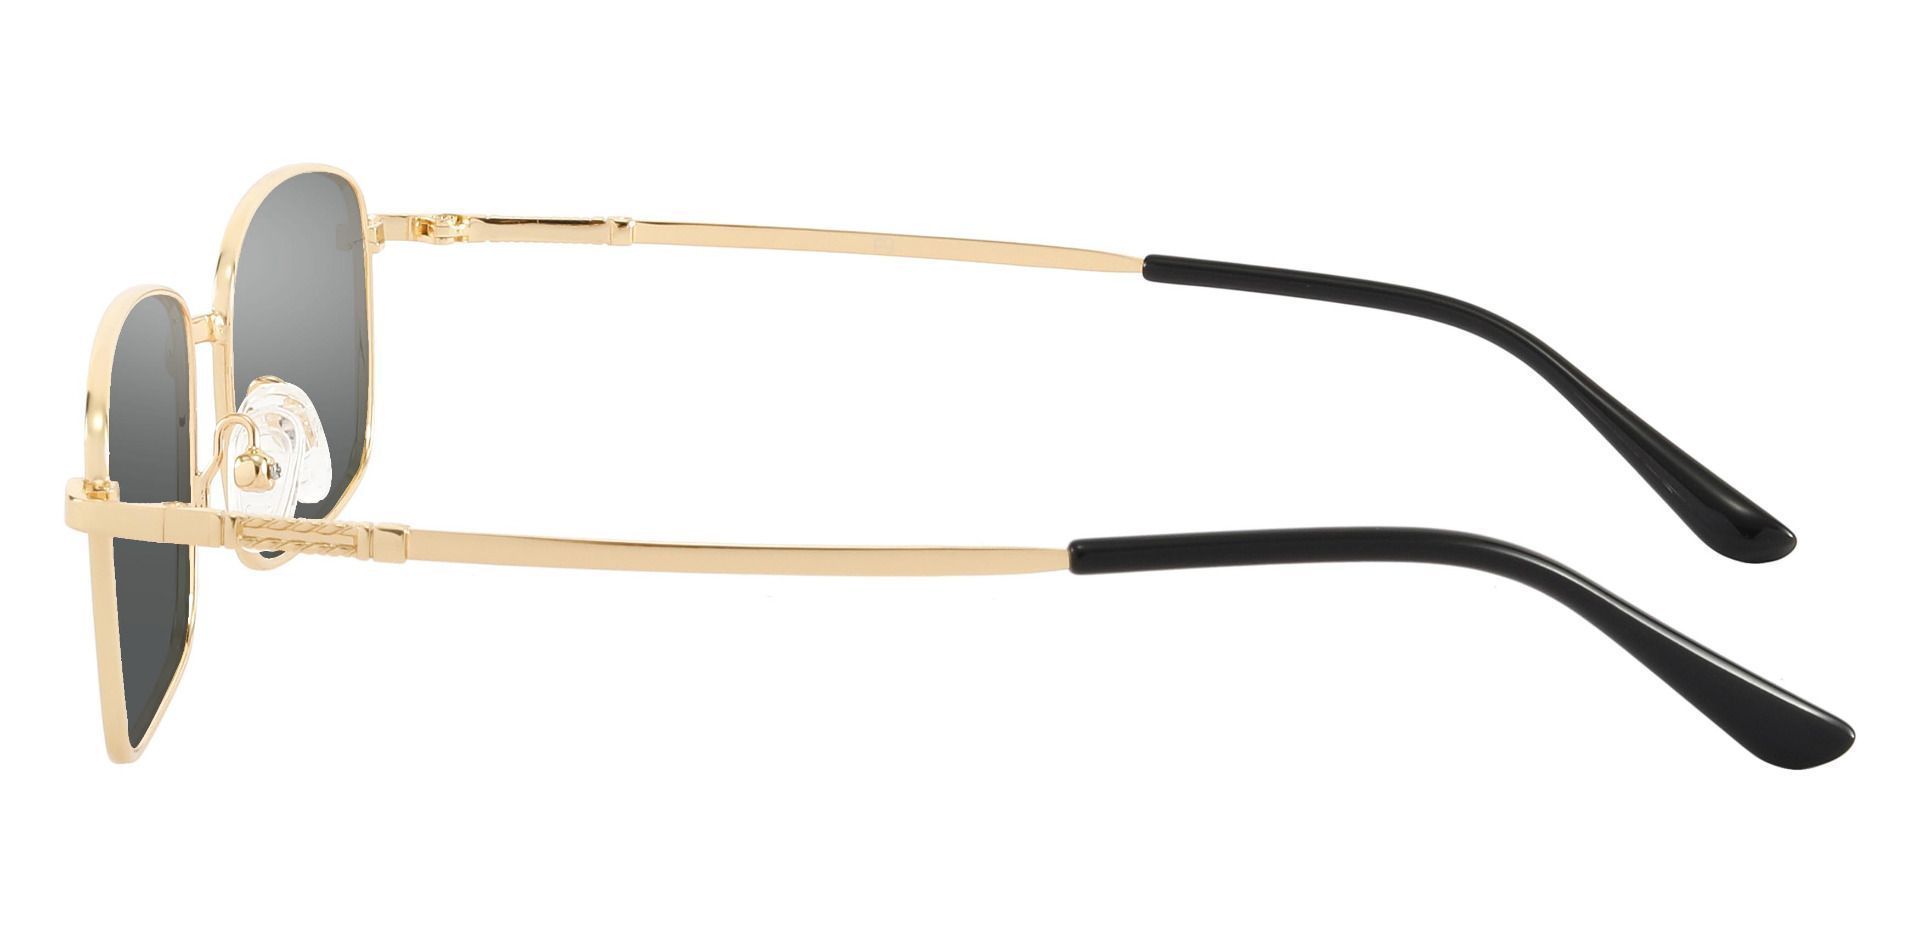 Clyde Rectangle Progressive Sunglasses - Gold Frame With Gray Lenses